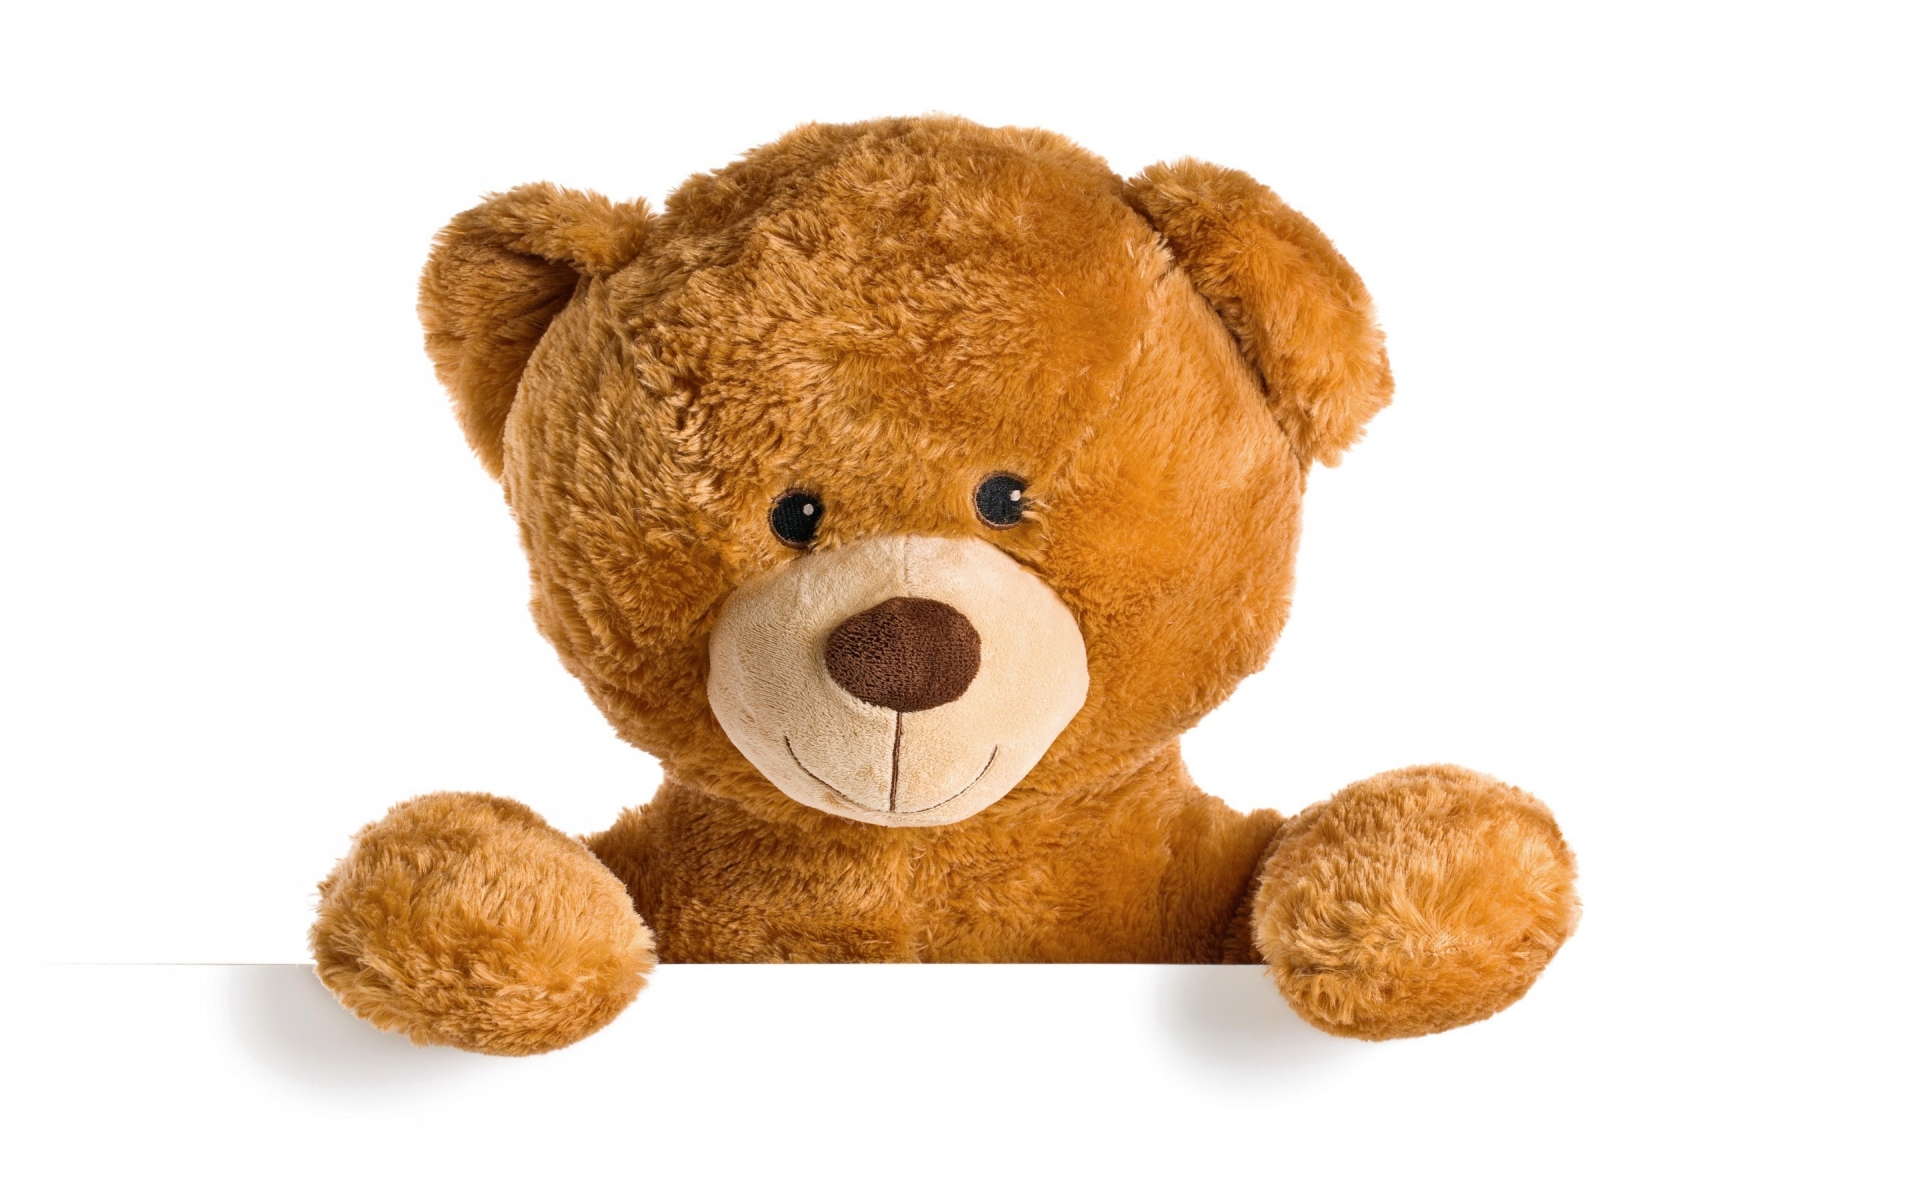 Cute Teddy Bear for 1920 x 1200 widescreen resolution